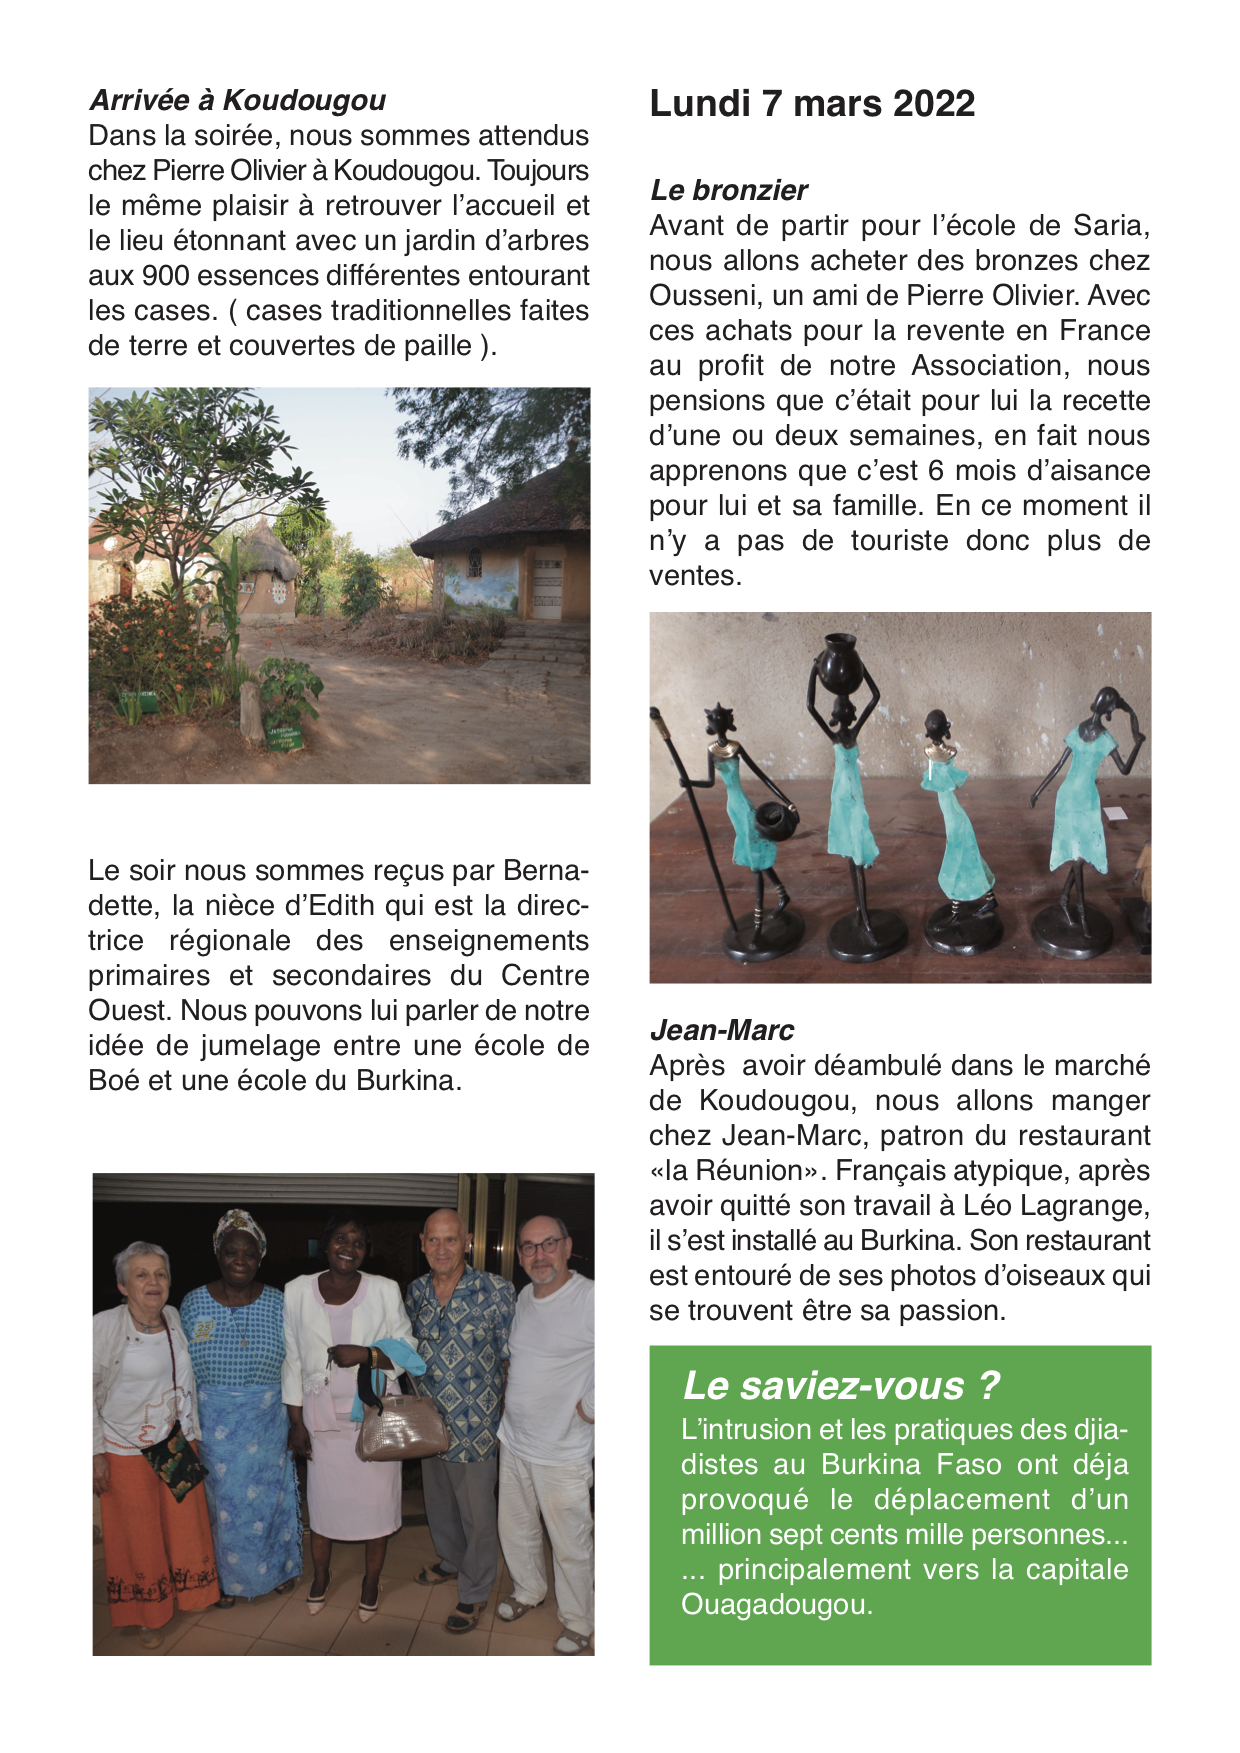 Journal de voyage au Burkina Faso - Dimanche 6 au lundi 7 mars 2022 - page 3